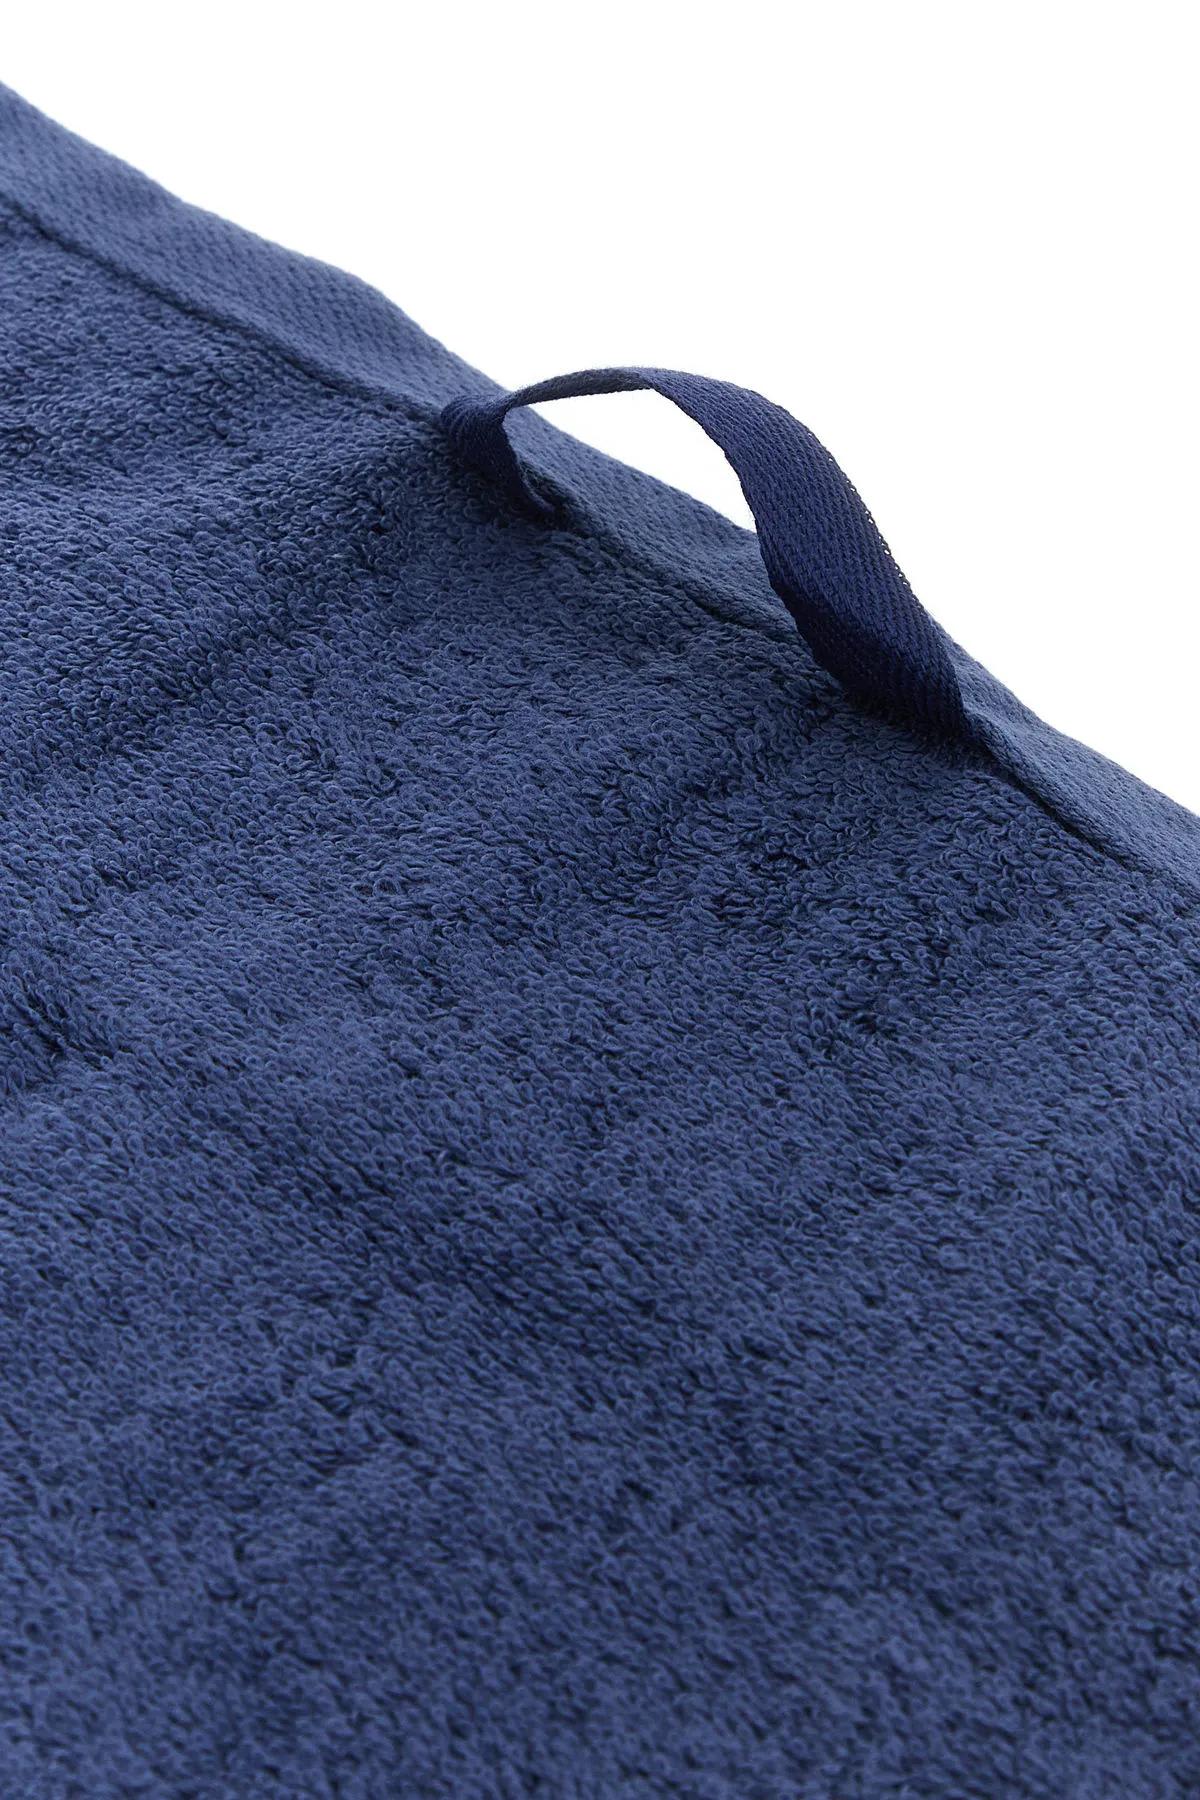 Shop Tekla Air Force Blue Terry Towel